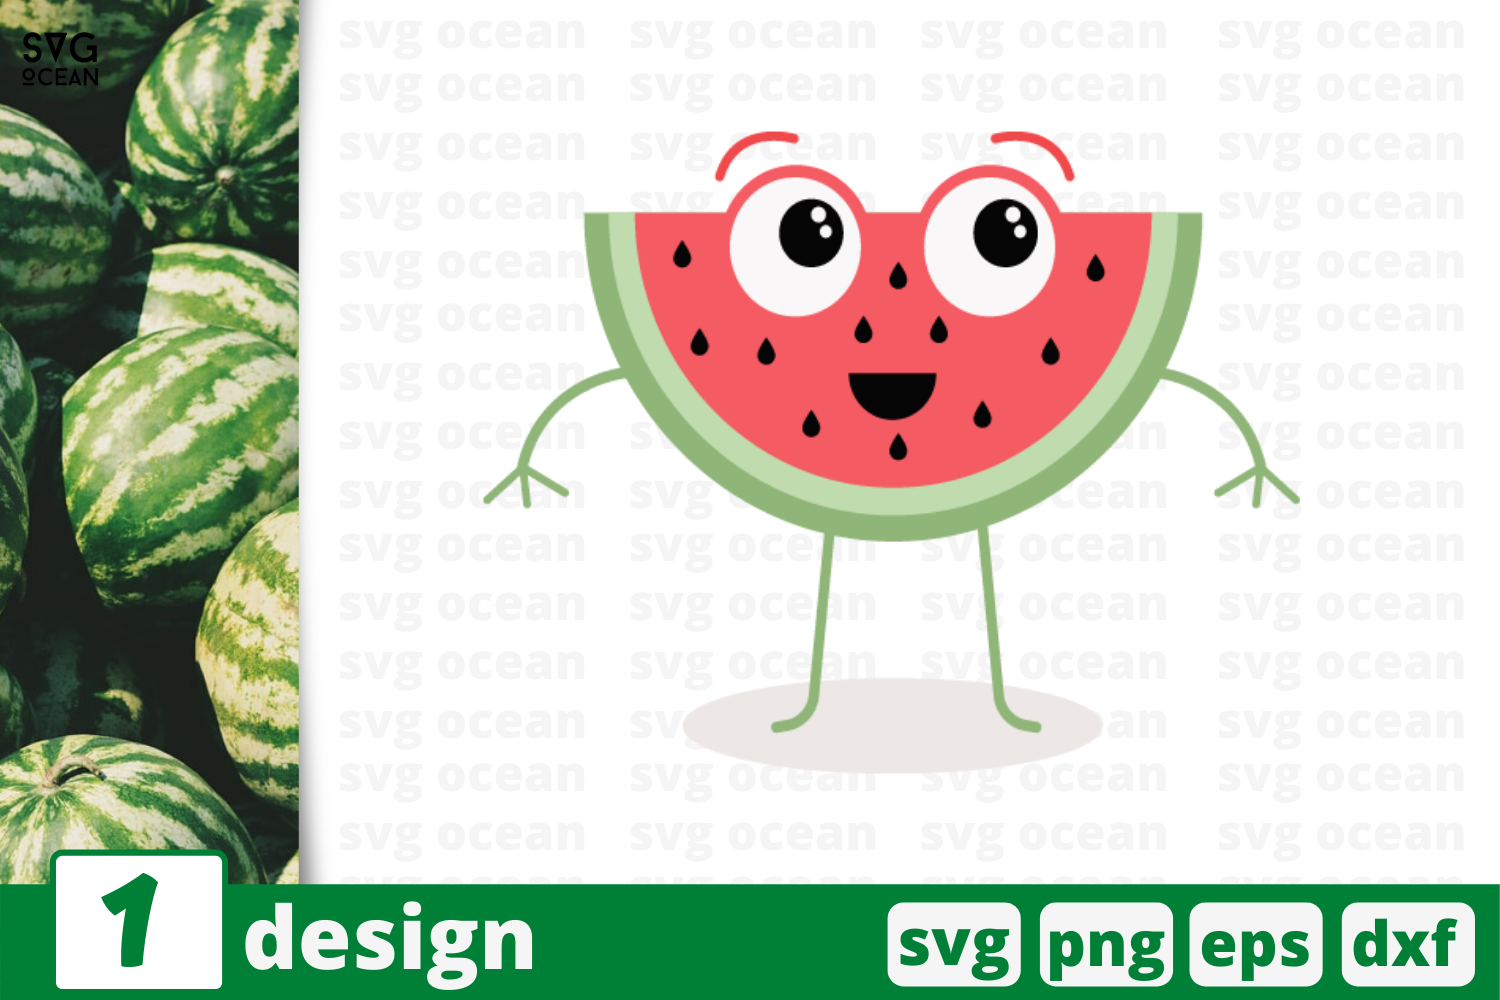 1 Watermelon Svg Bundle Fruit Cricut Svg By Svgocean Thehungryjpeg Com